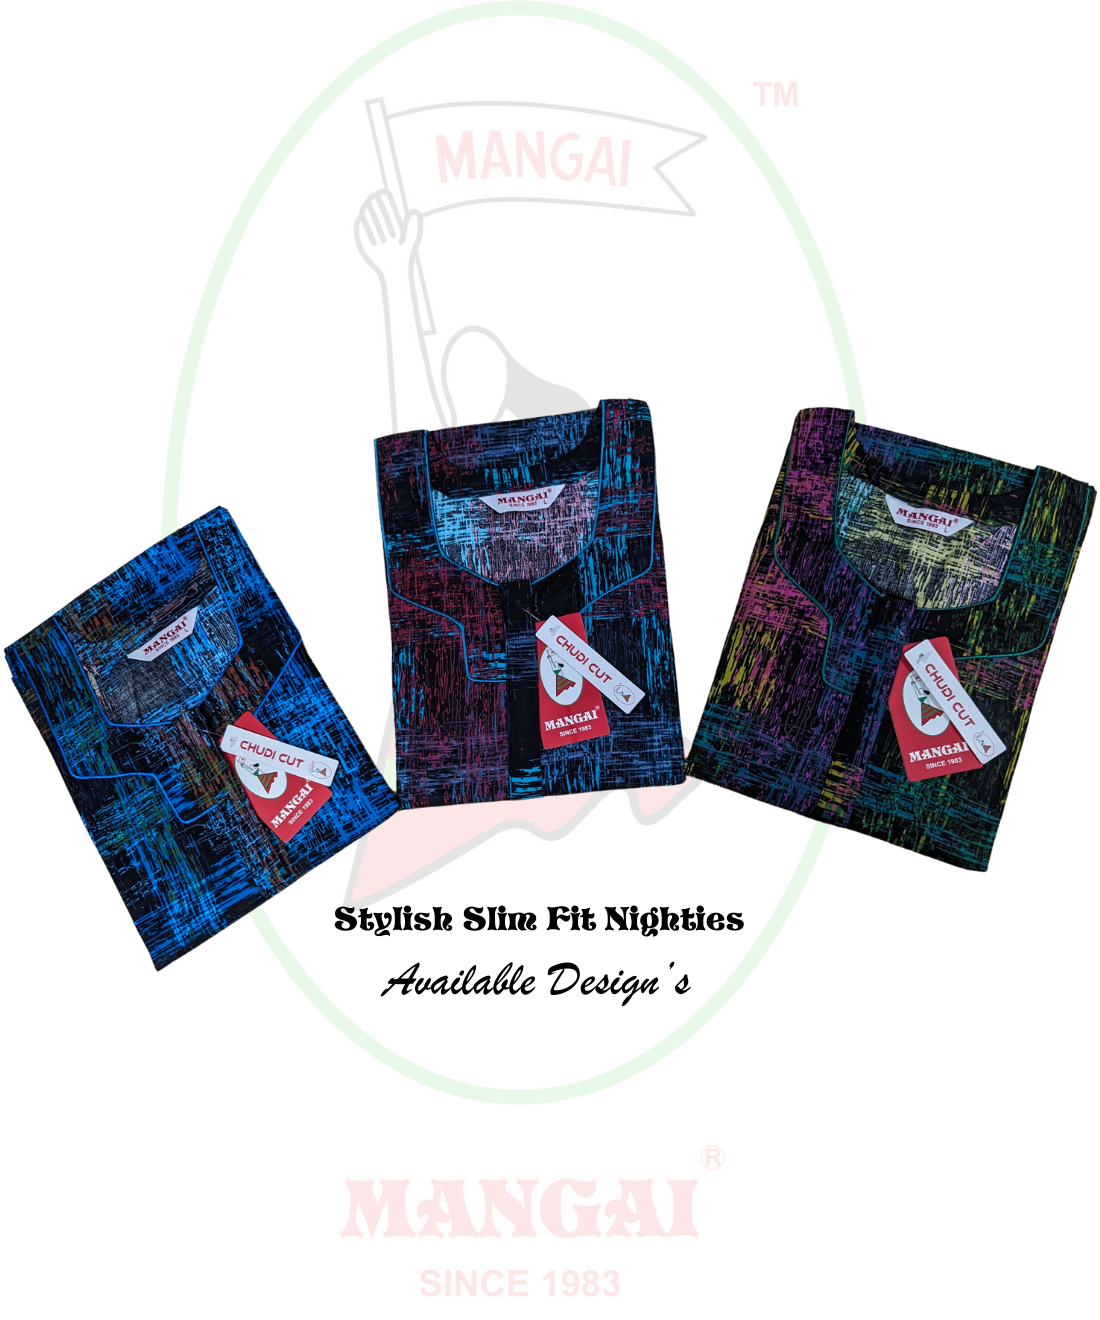 New Arrivals MANGAI Premium Regular Fit Cotton Nighties - All Over Printed Stylish Nightwear for Stylish Women | Beautiful Nighties for Stylish Women's | Shrinkage Free Nighties | New CHUDI Cut Model